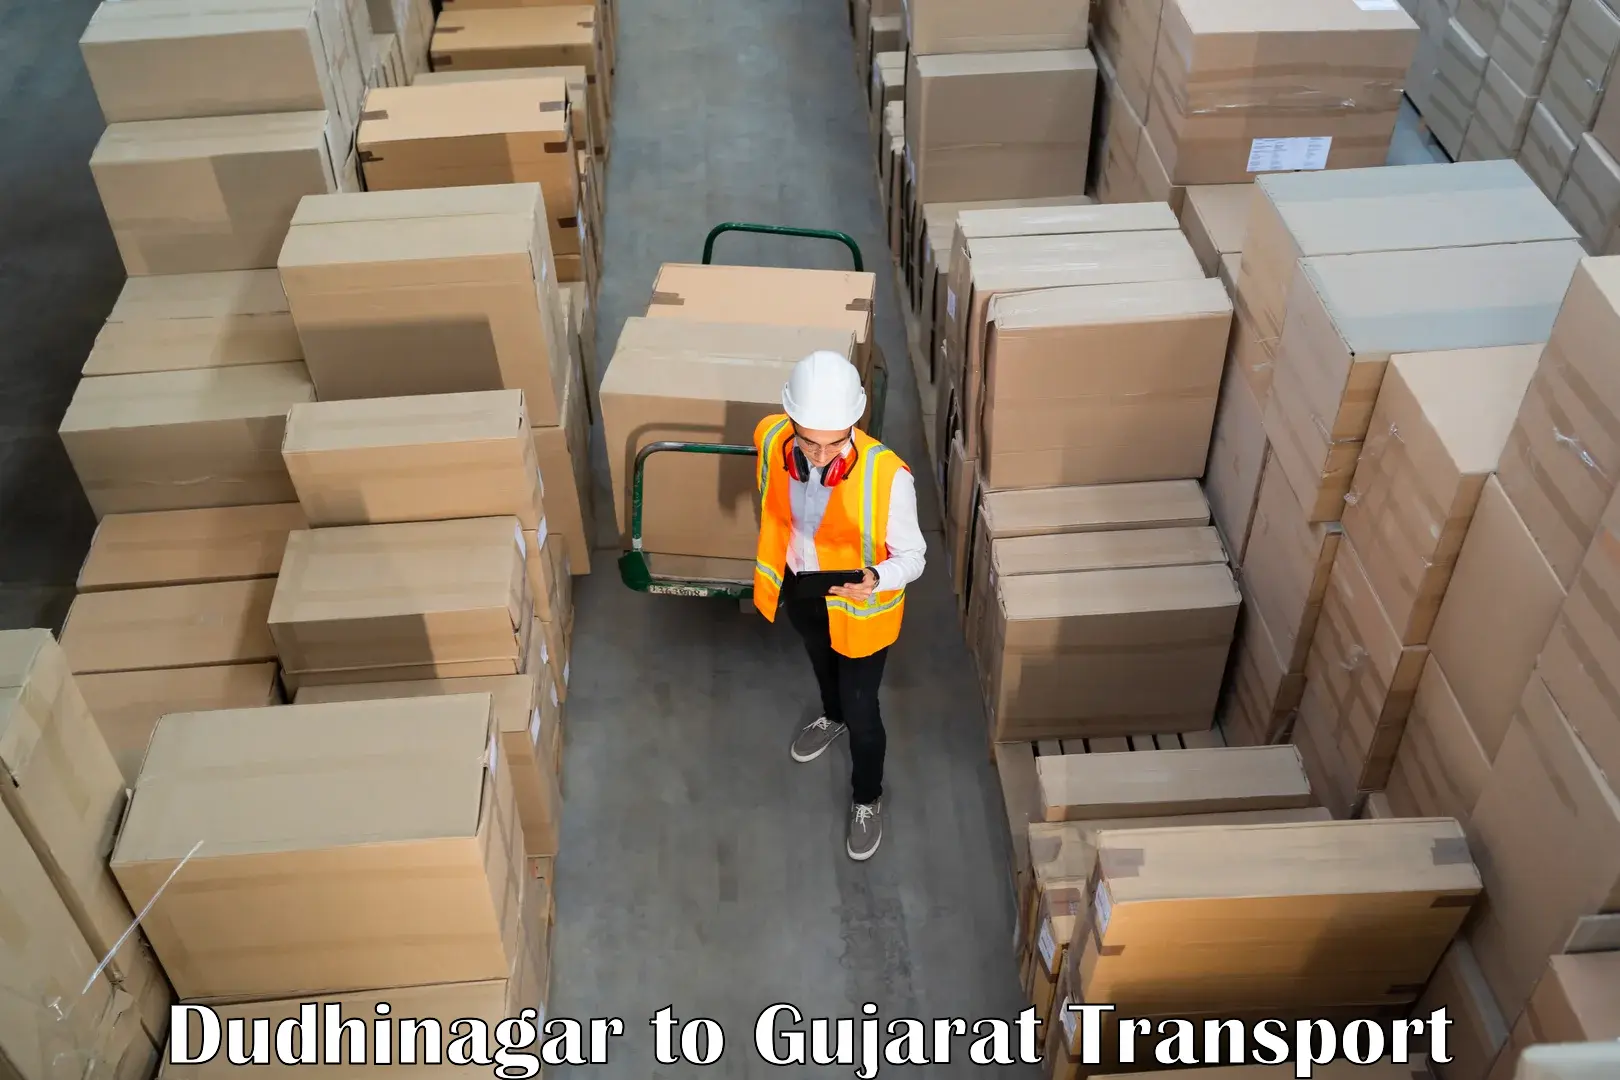 Transport in sharing Dudhinagar to Ahmedabad